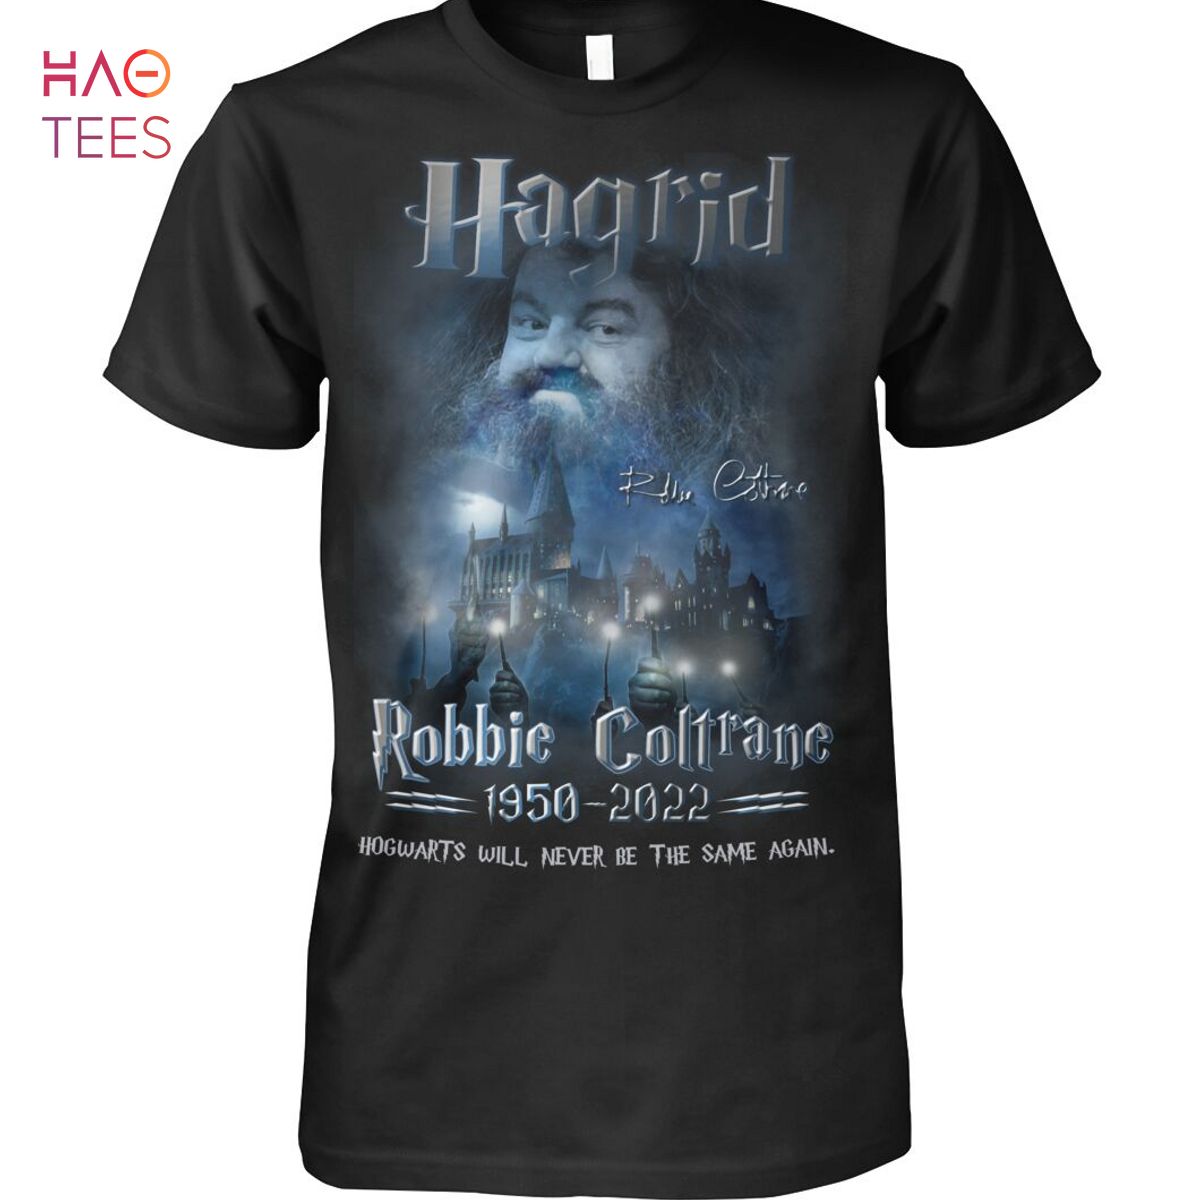 Hagrid Robbie Coltrane 1950-2022 Hogwarts Will Never Be The Same Again Shirt